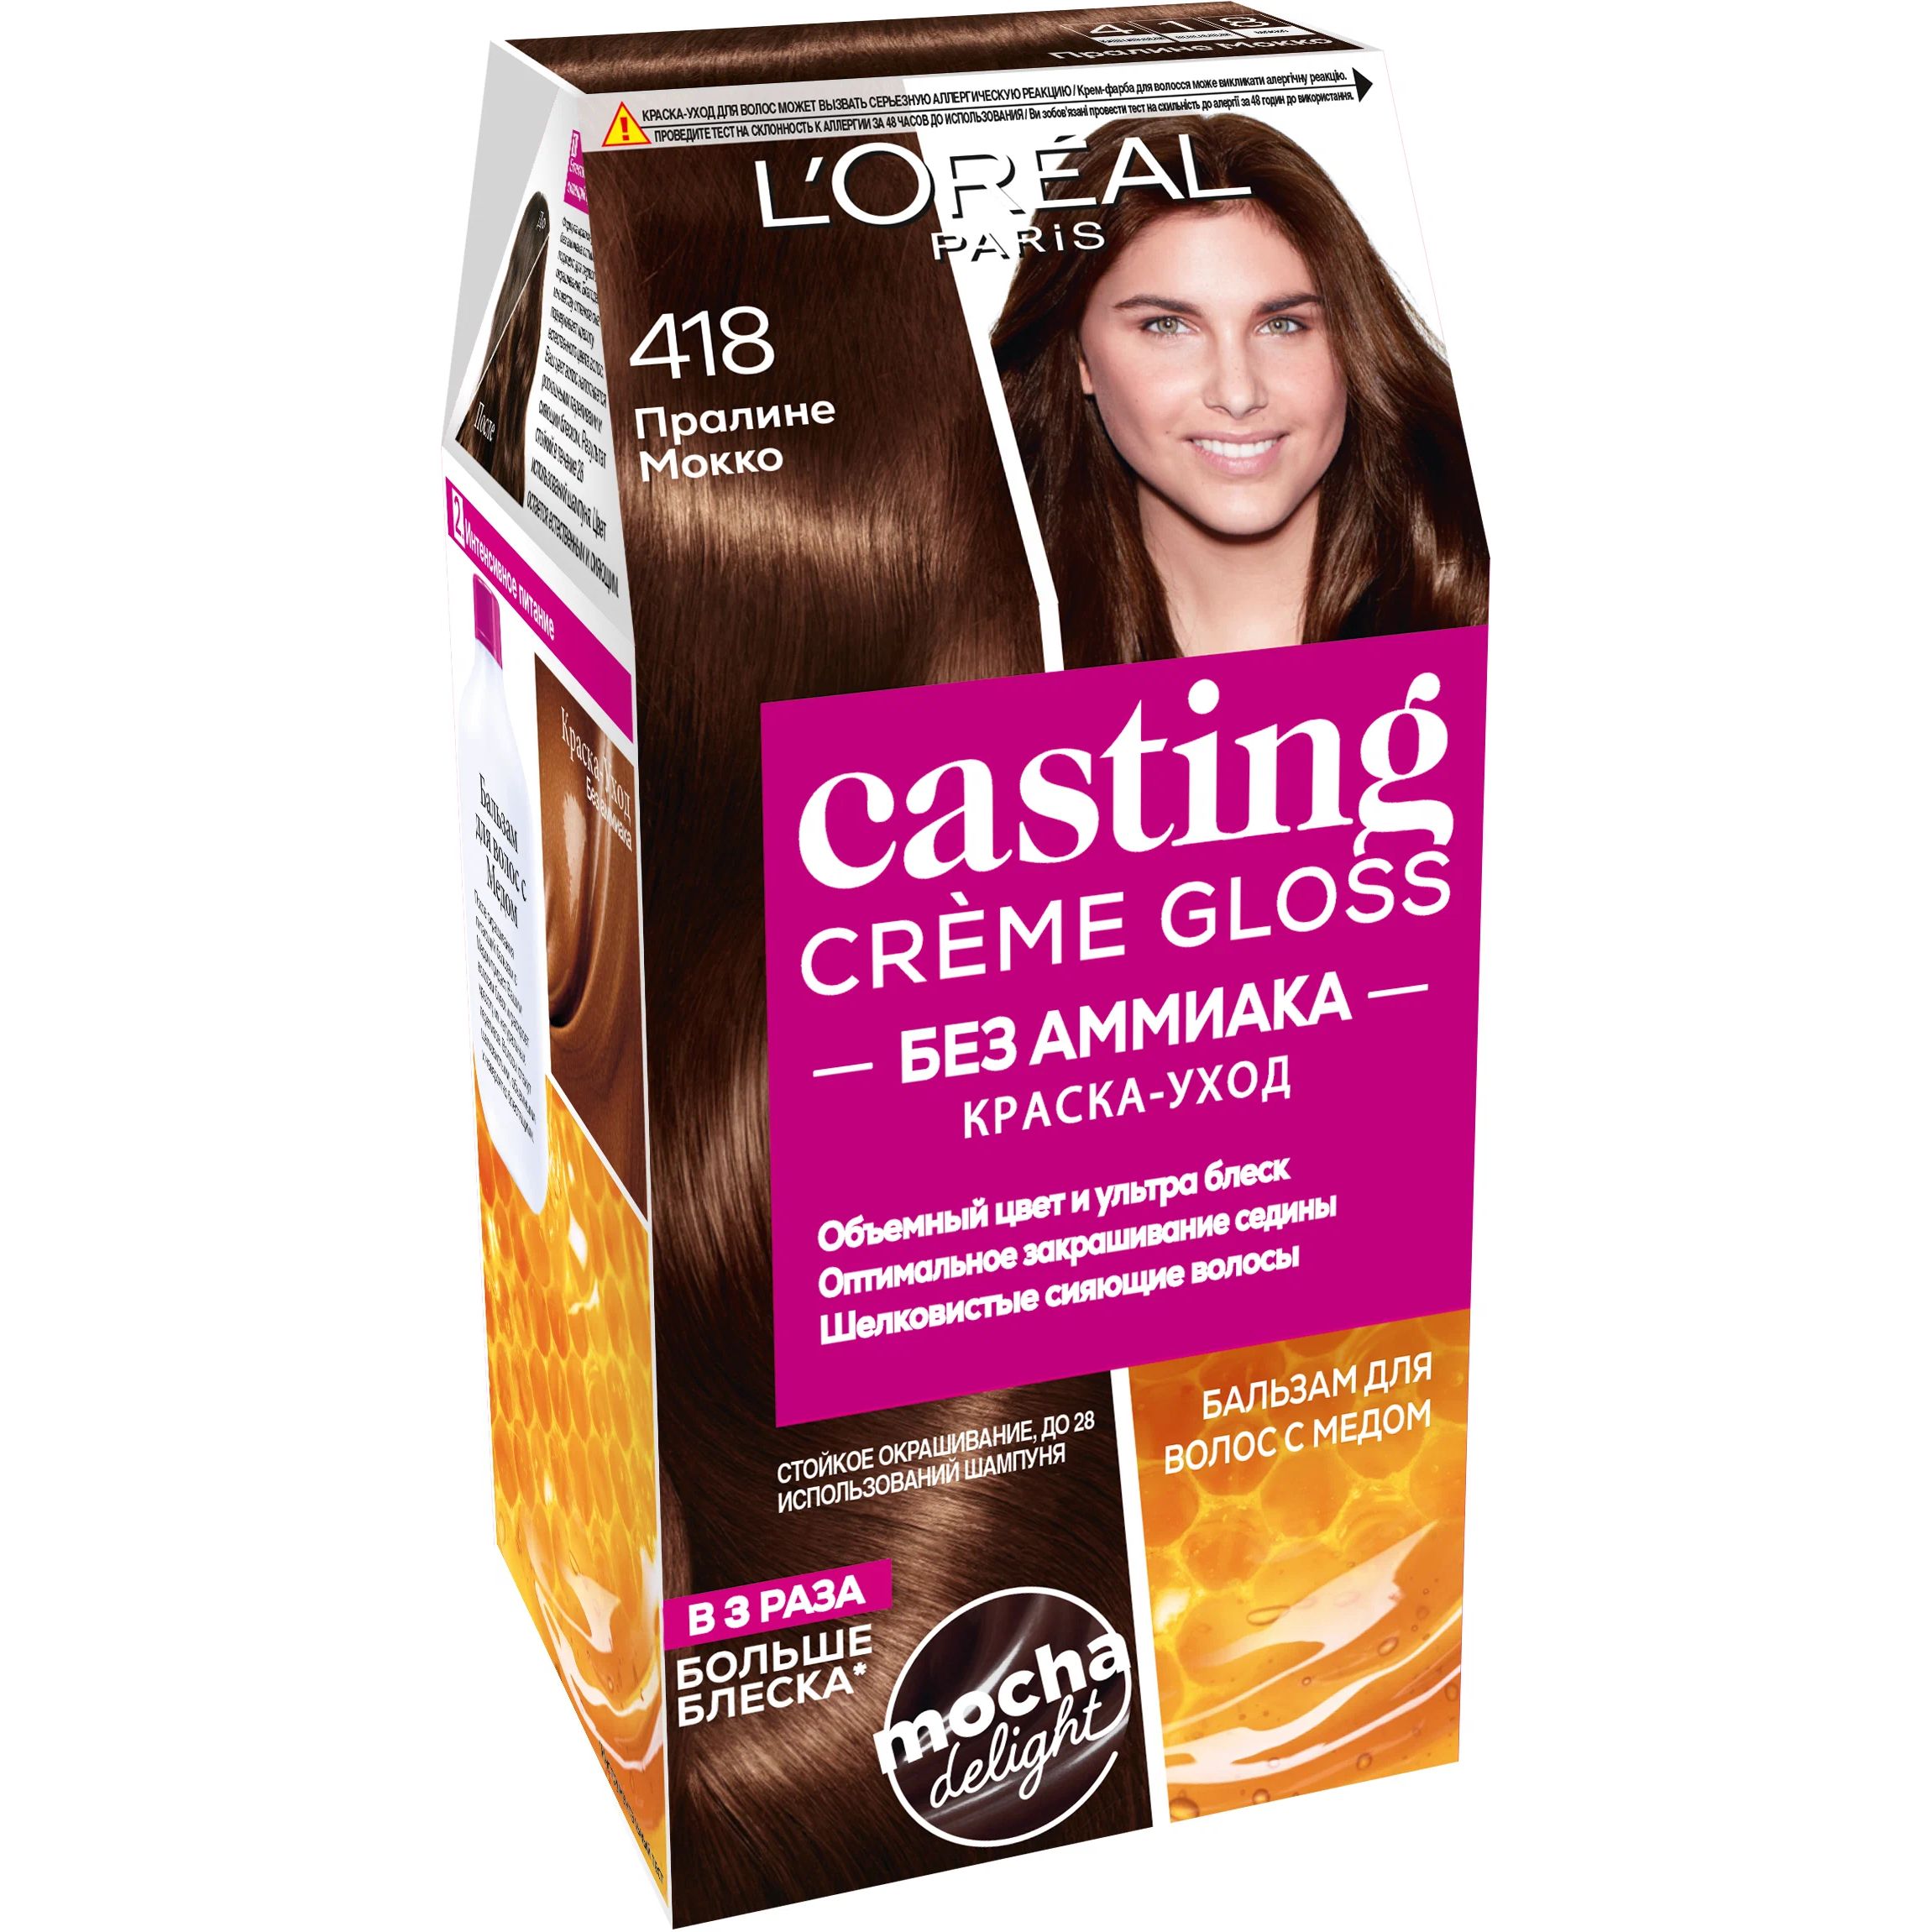 Краска-уход для волос L'Oreal Paris Casting Creme Gloss пралине мокко, №418, 239 мл уход l oreal professionnel